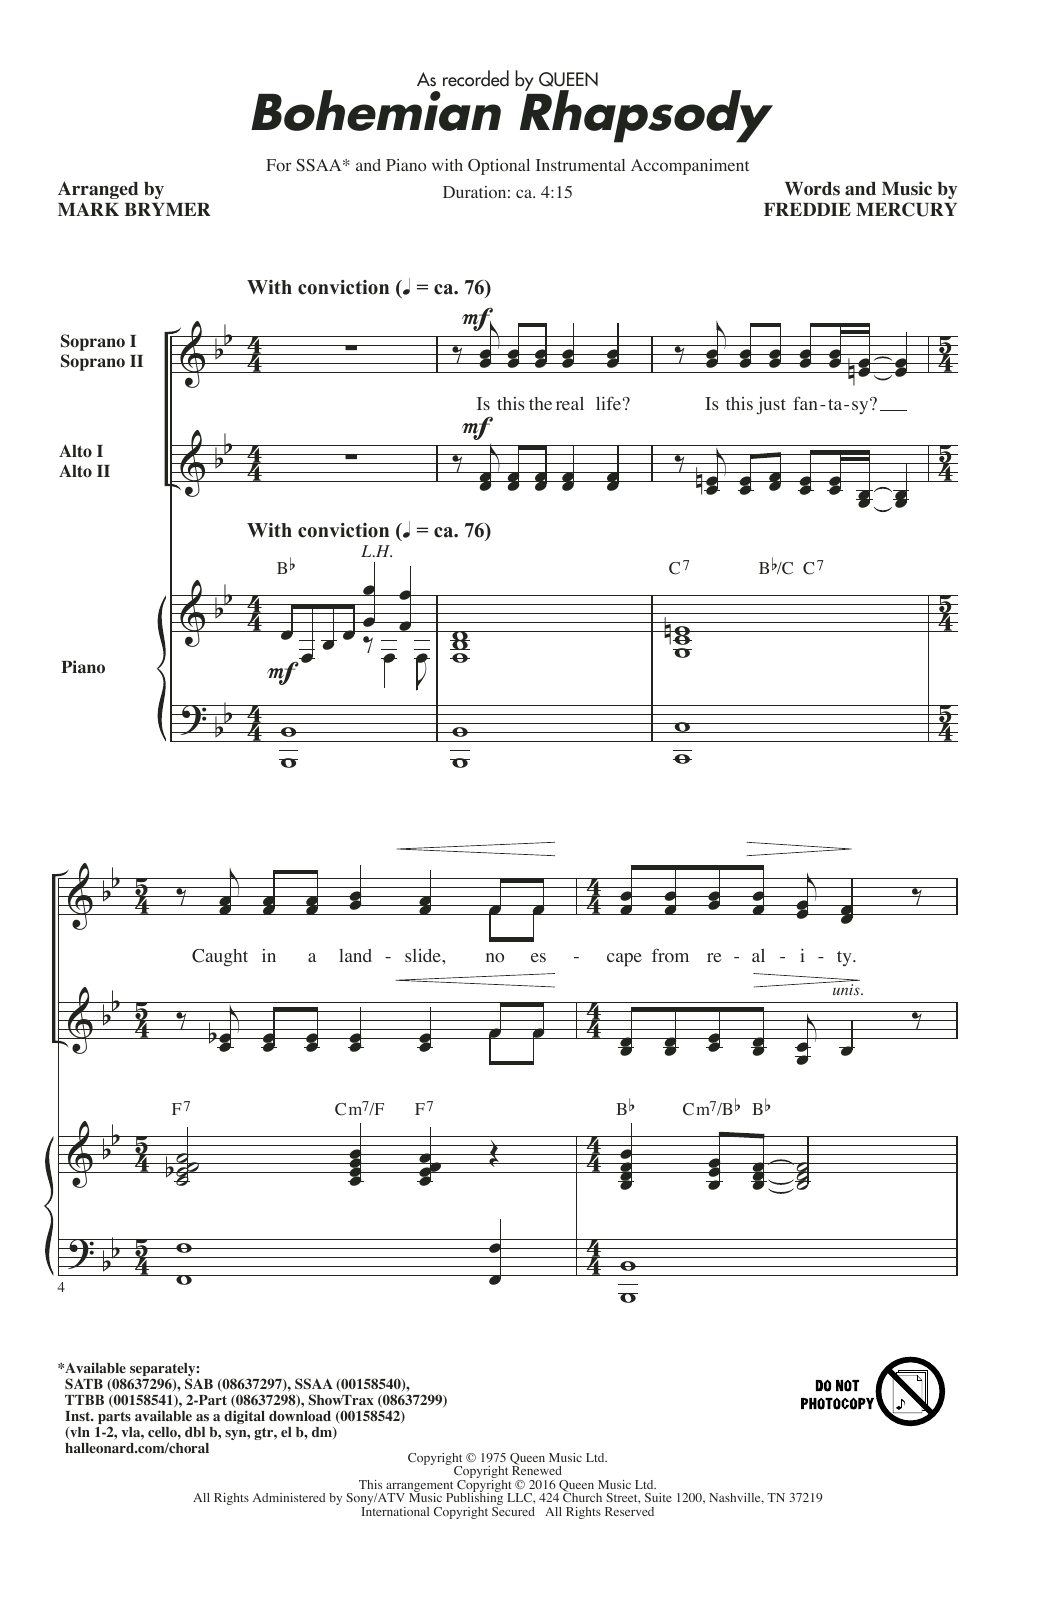 Queen Bohemian Rhapsody (arr. Mark Brymer) sheet music notes and chords arranged for SSAA Choir